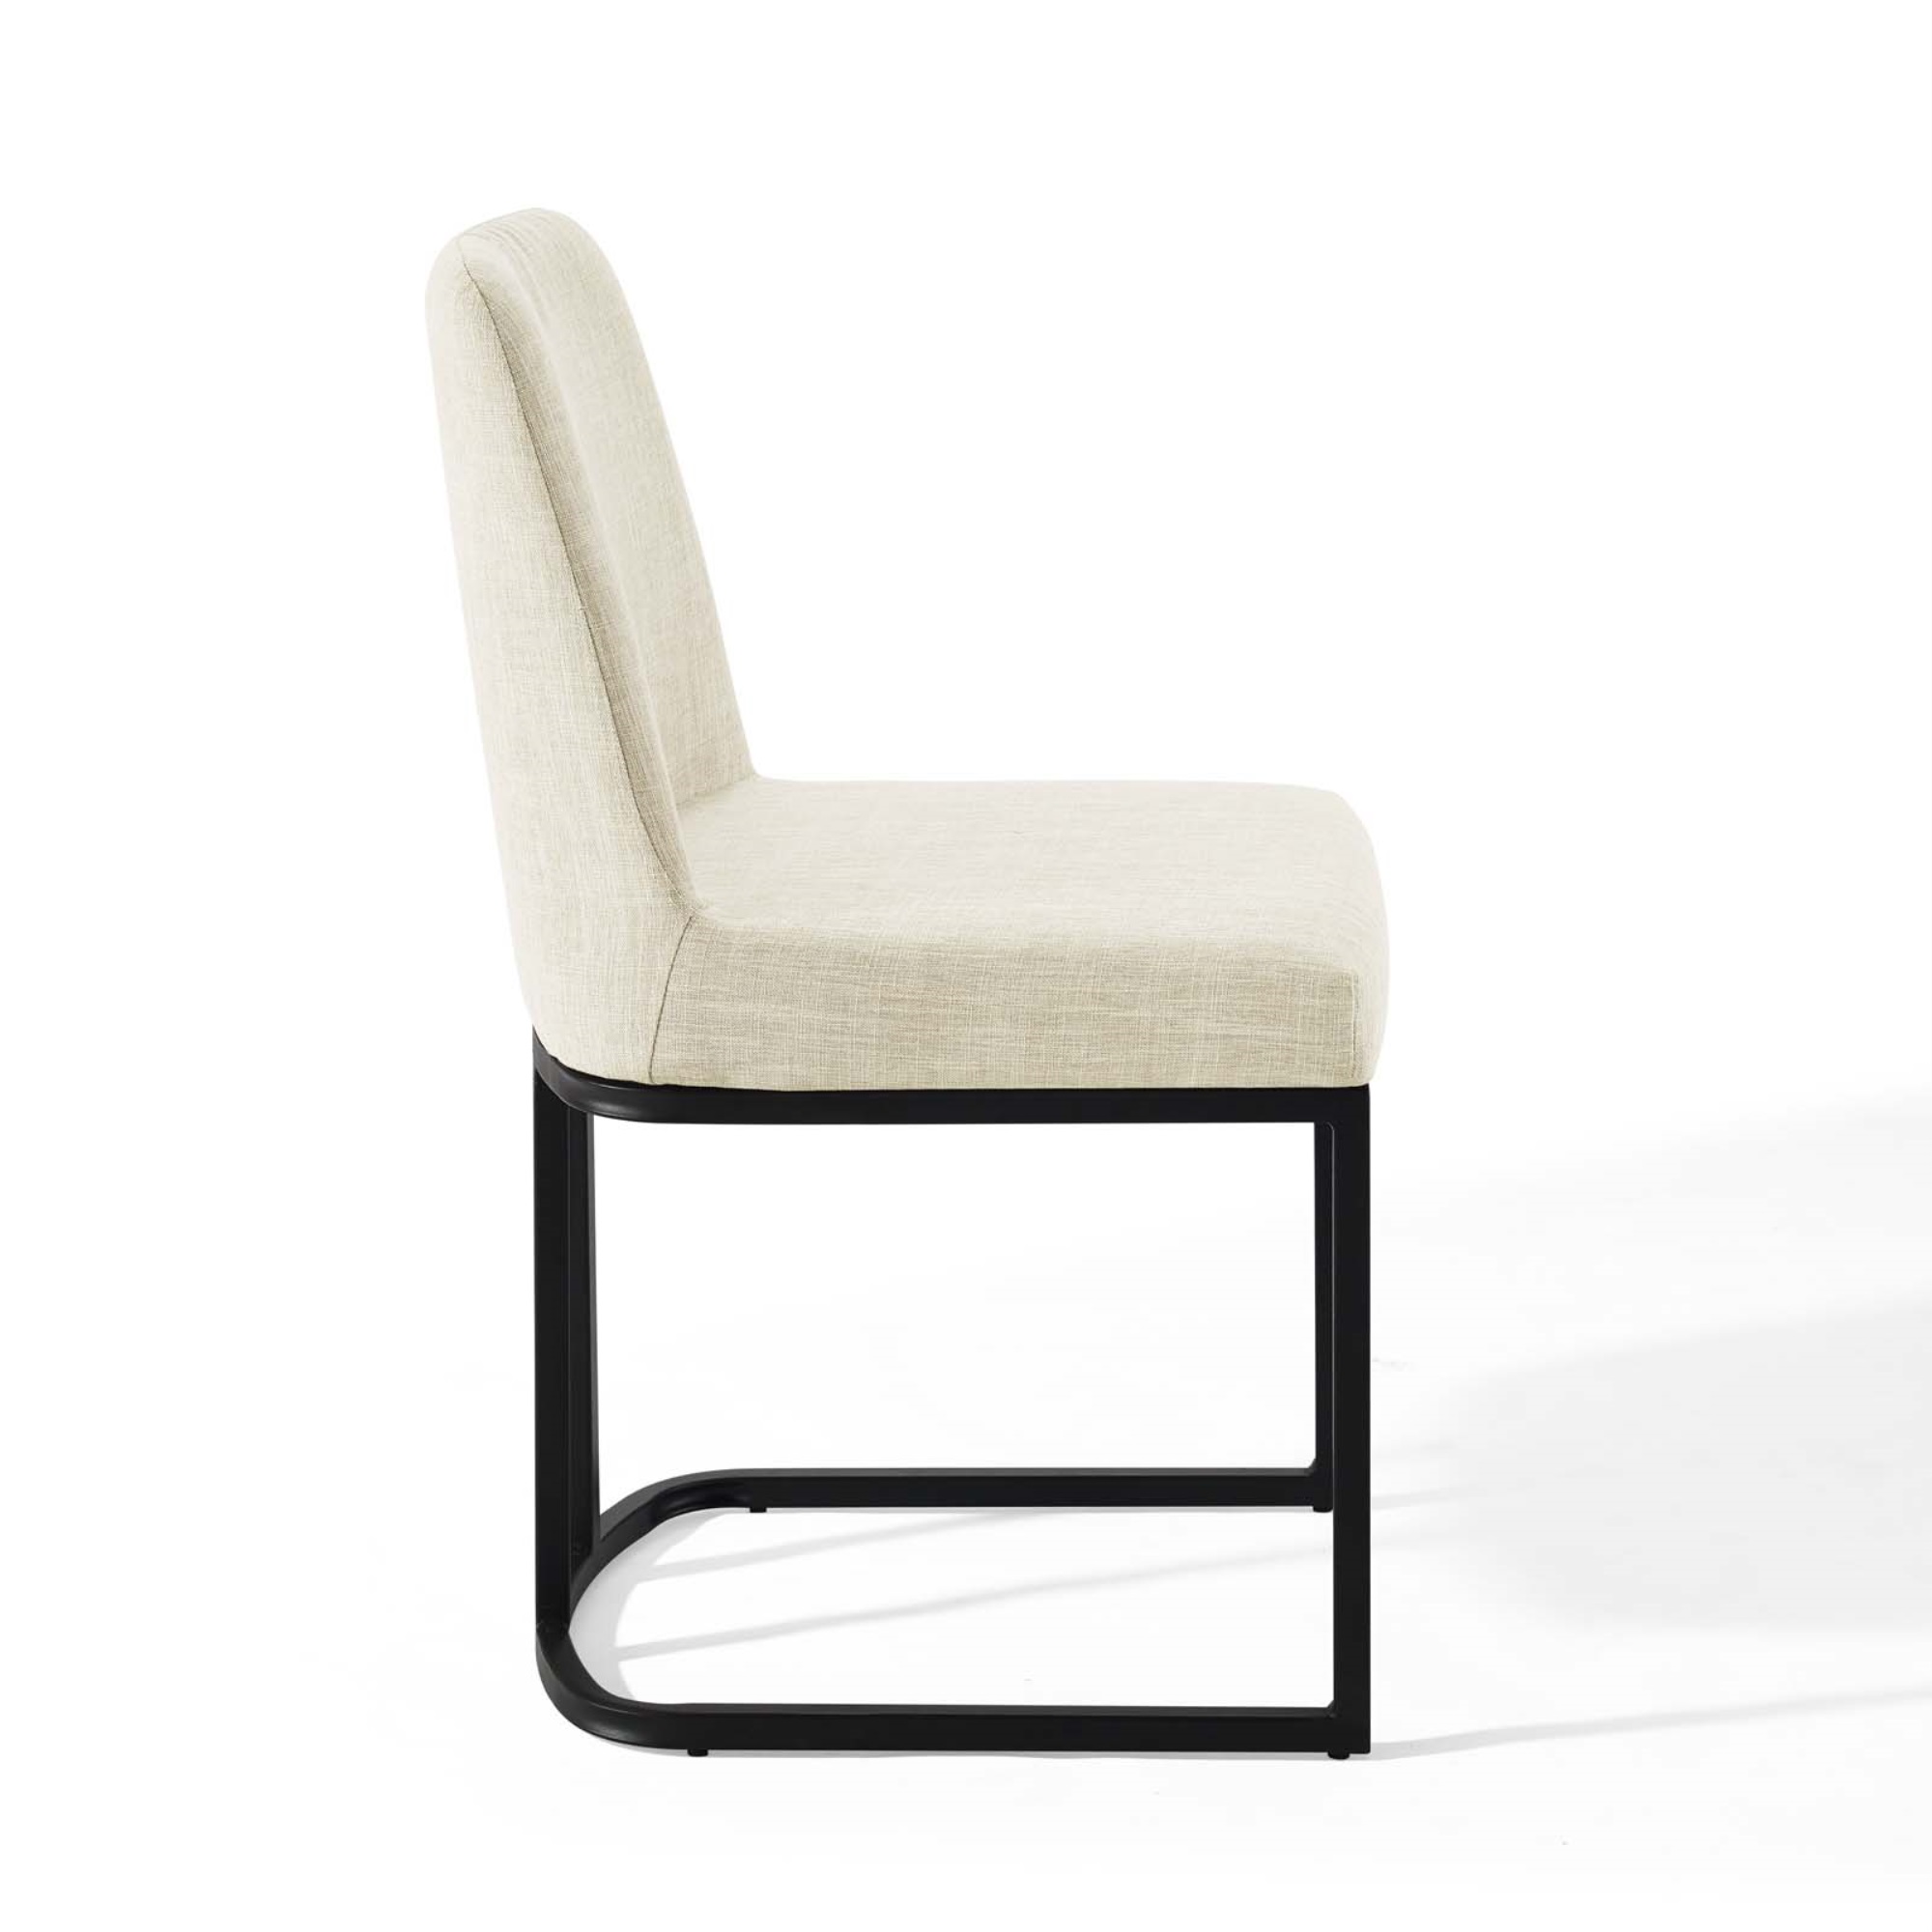 Ergode Amplify Sled Base Upholstered Fabric Dining Side Chair - Black Beige